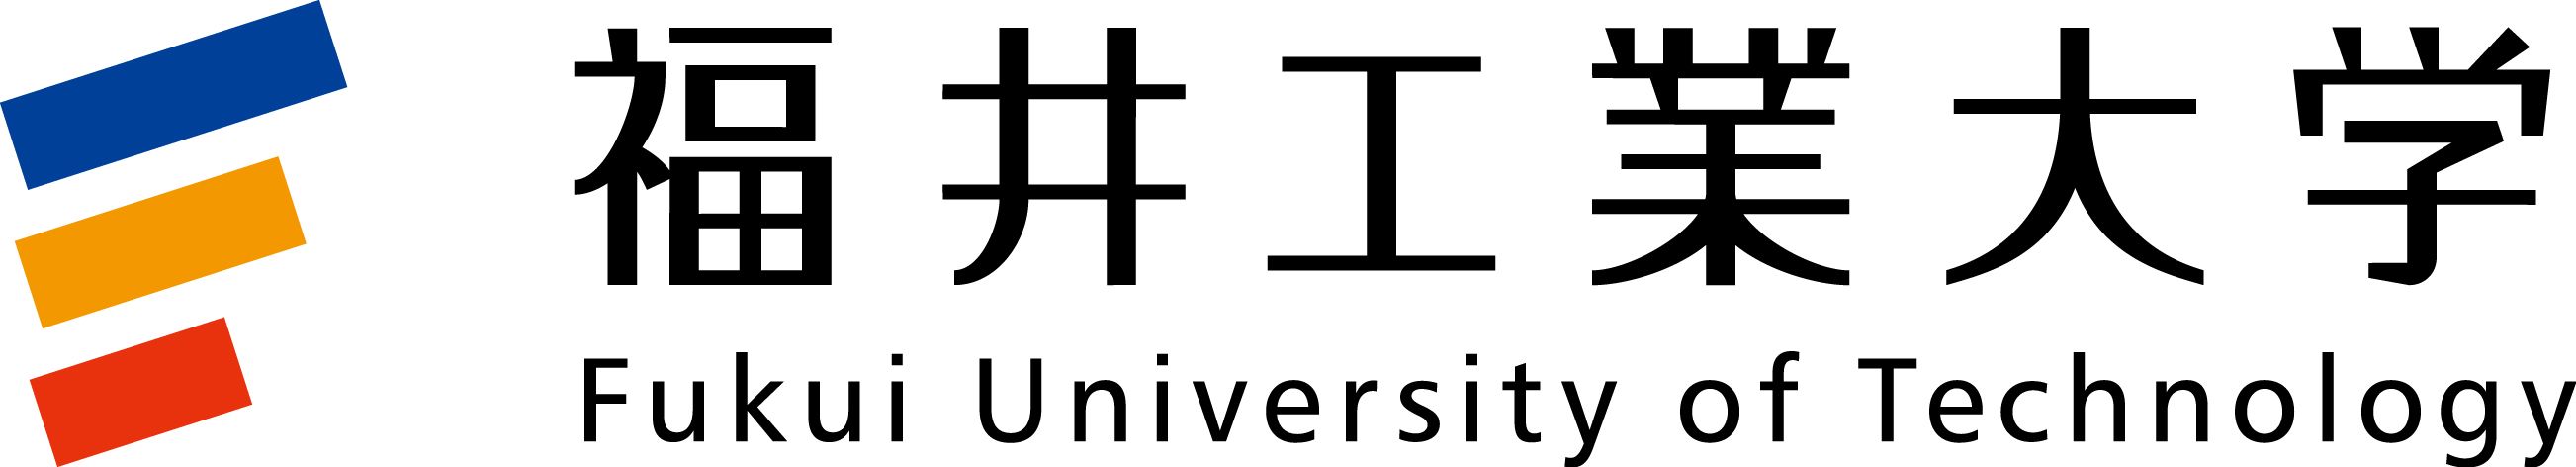 Fukui University of Technology Japan